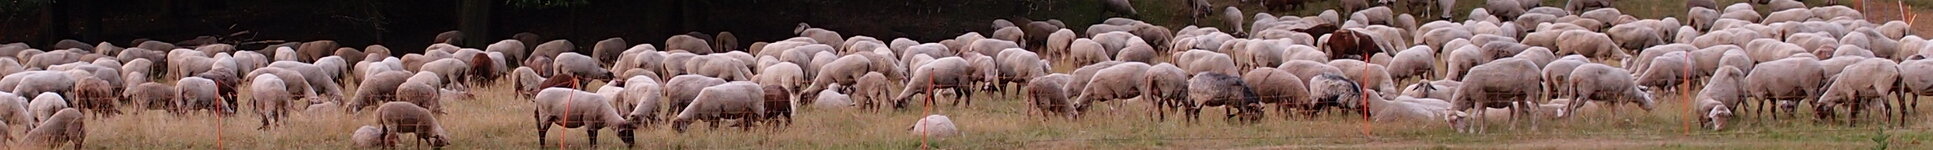 sheeps forum.jpg